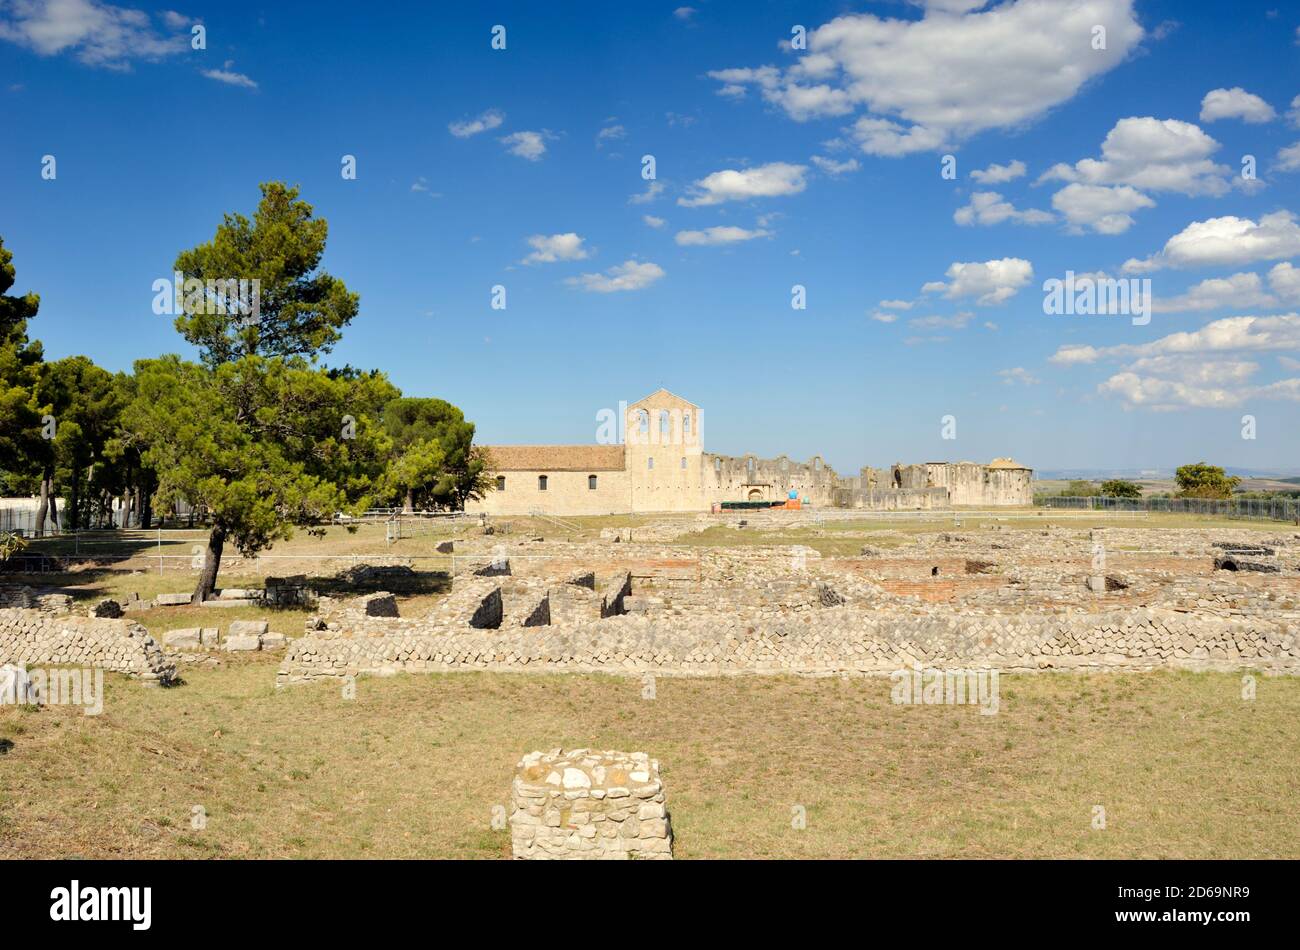 Italia, Basilicata, venosa, parco archeologico, rovine romane e chiesa medievale incompiuta Foto Stock